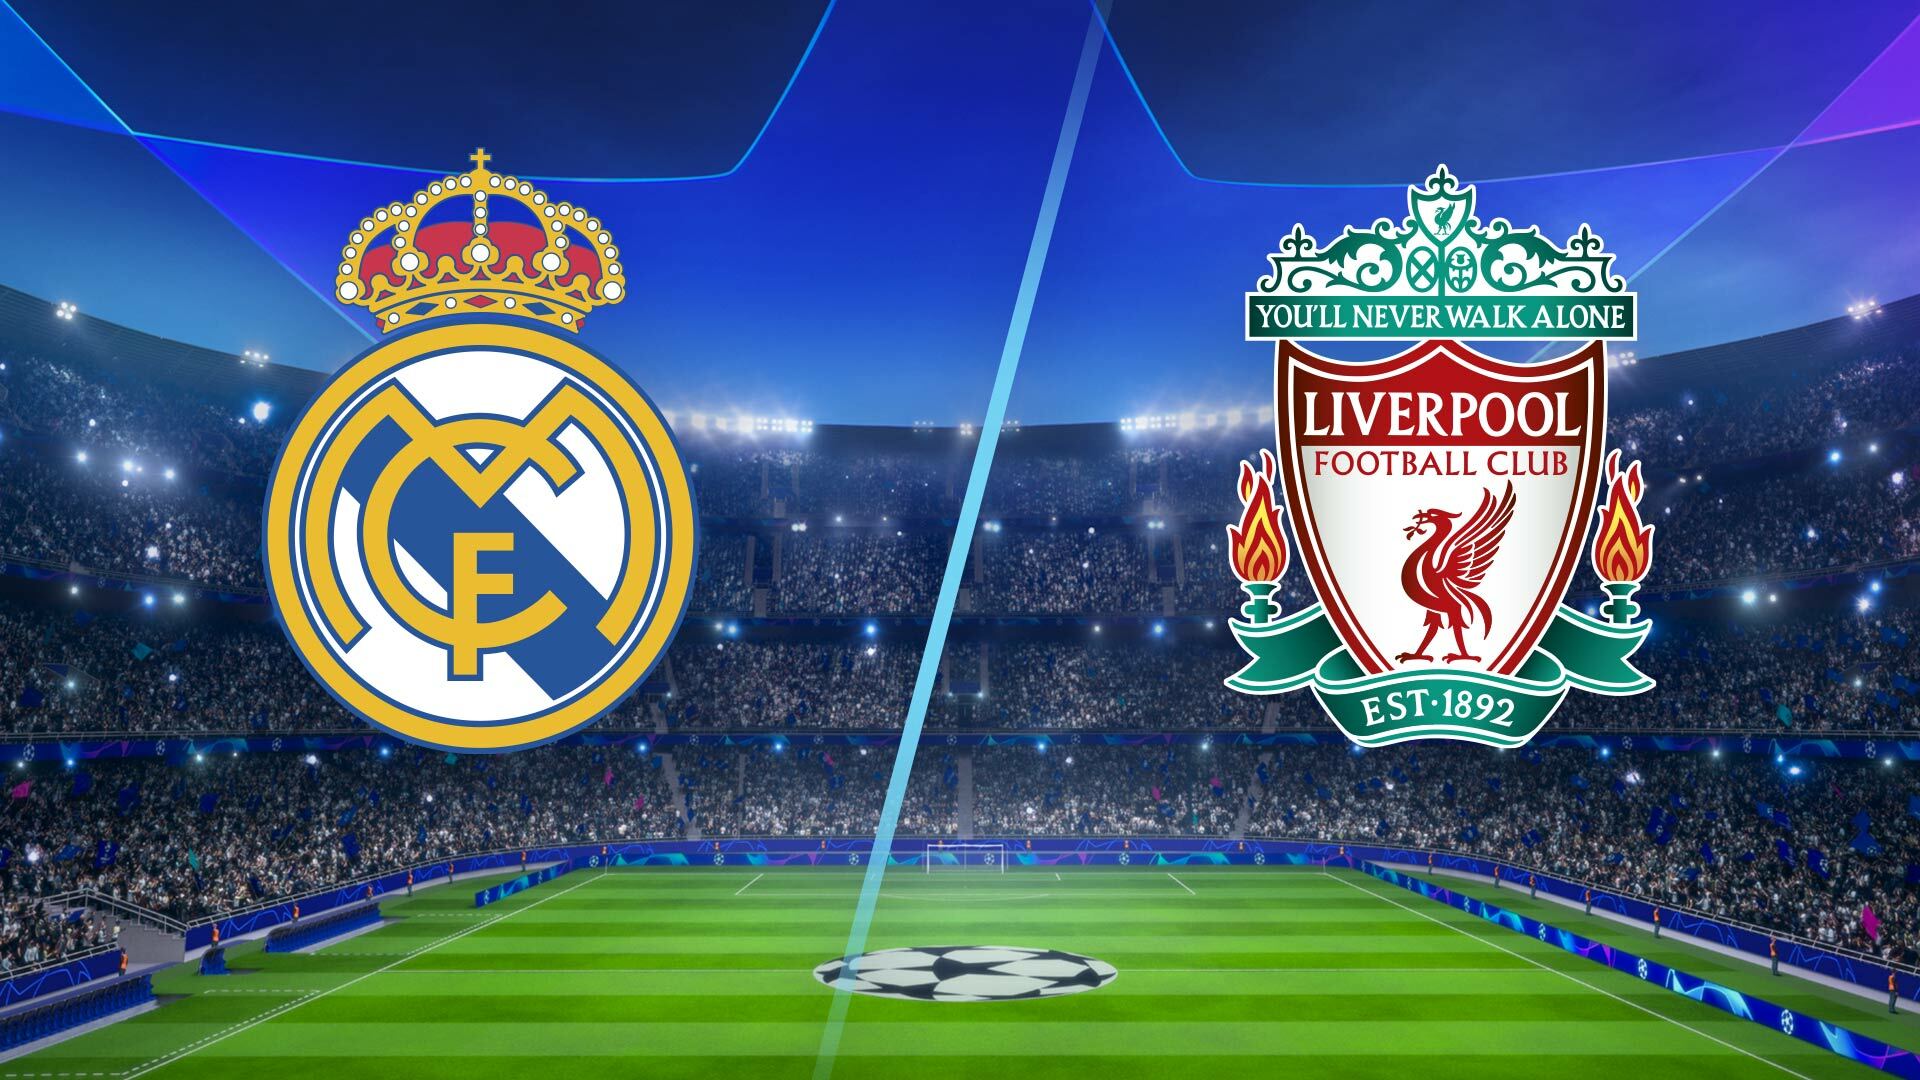 Watch UEFA Champions League Season 2021 Episode 127: Real Madrid vs. Liverpool show on Paramount Plus